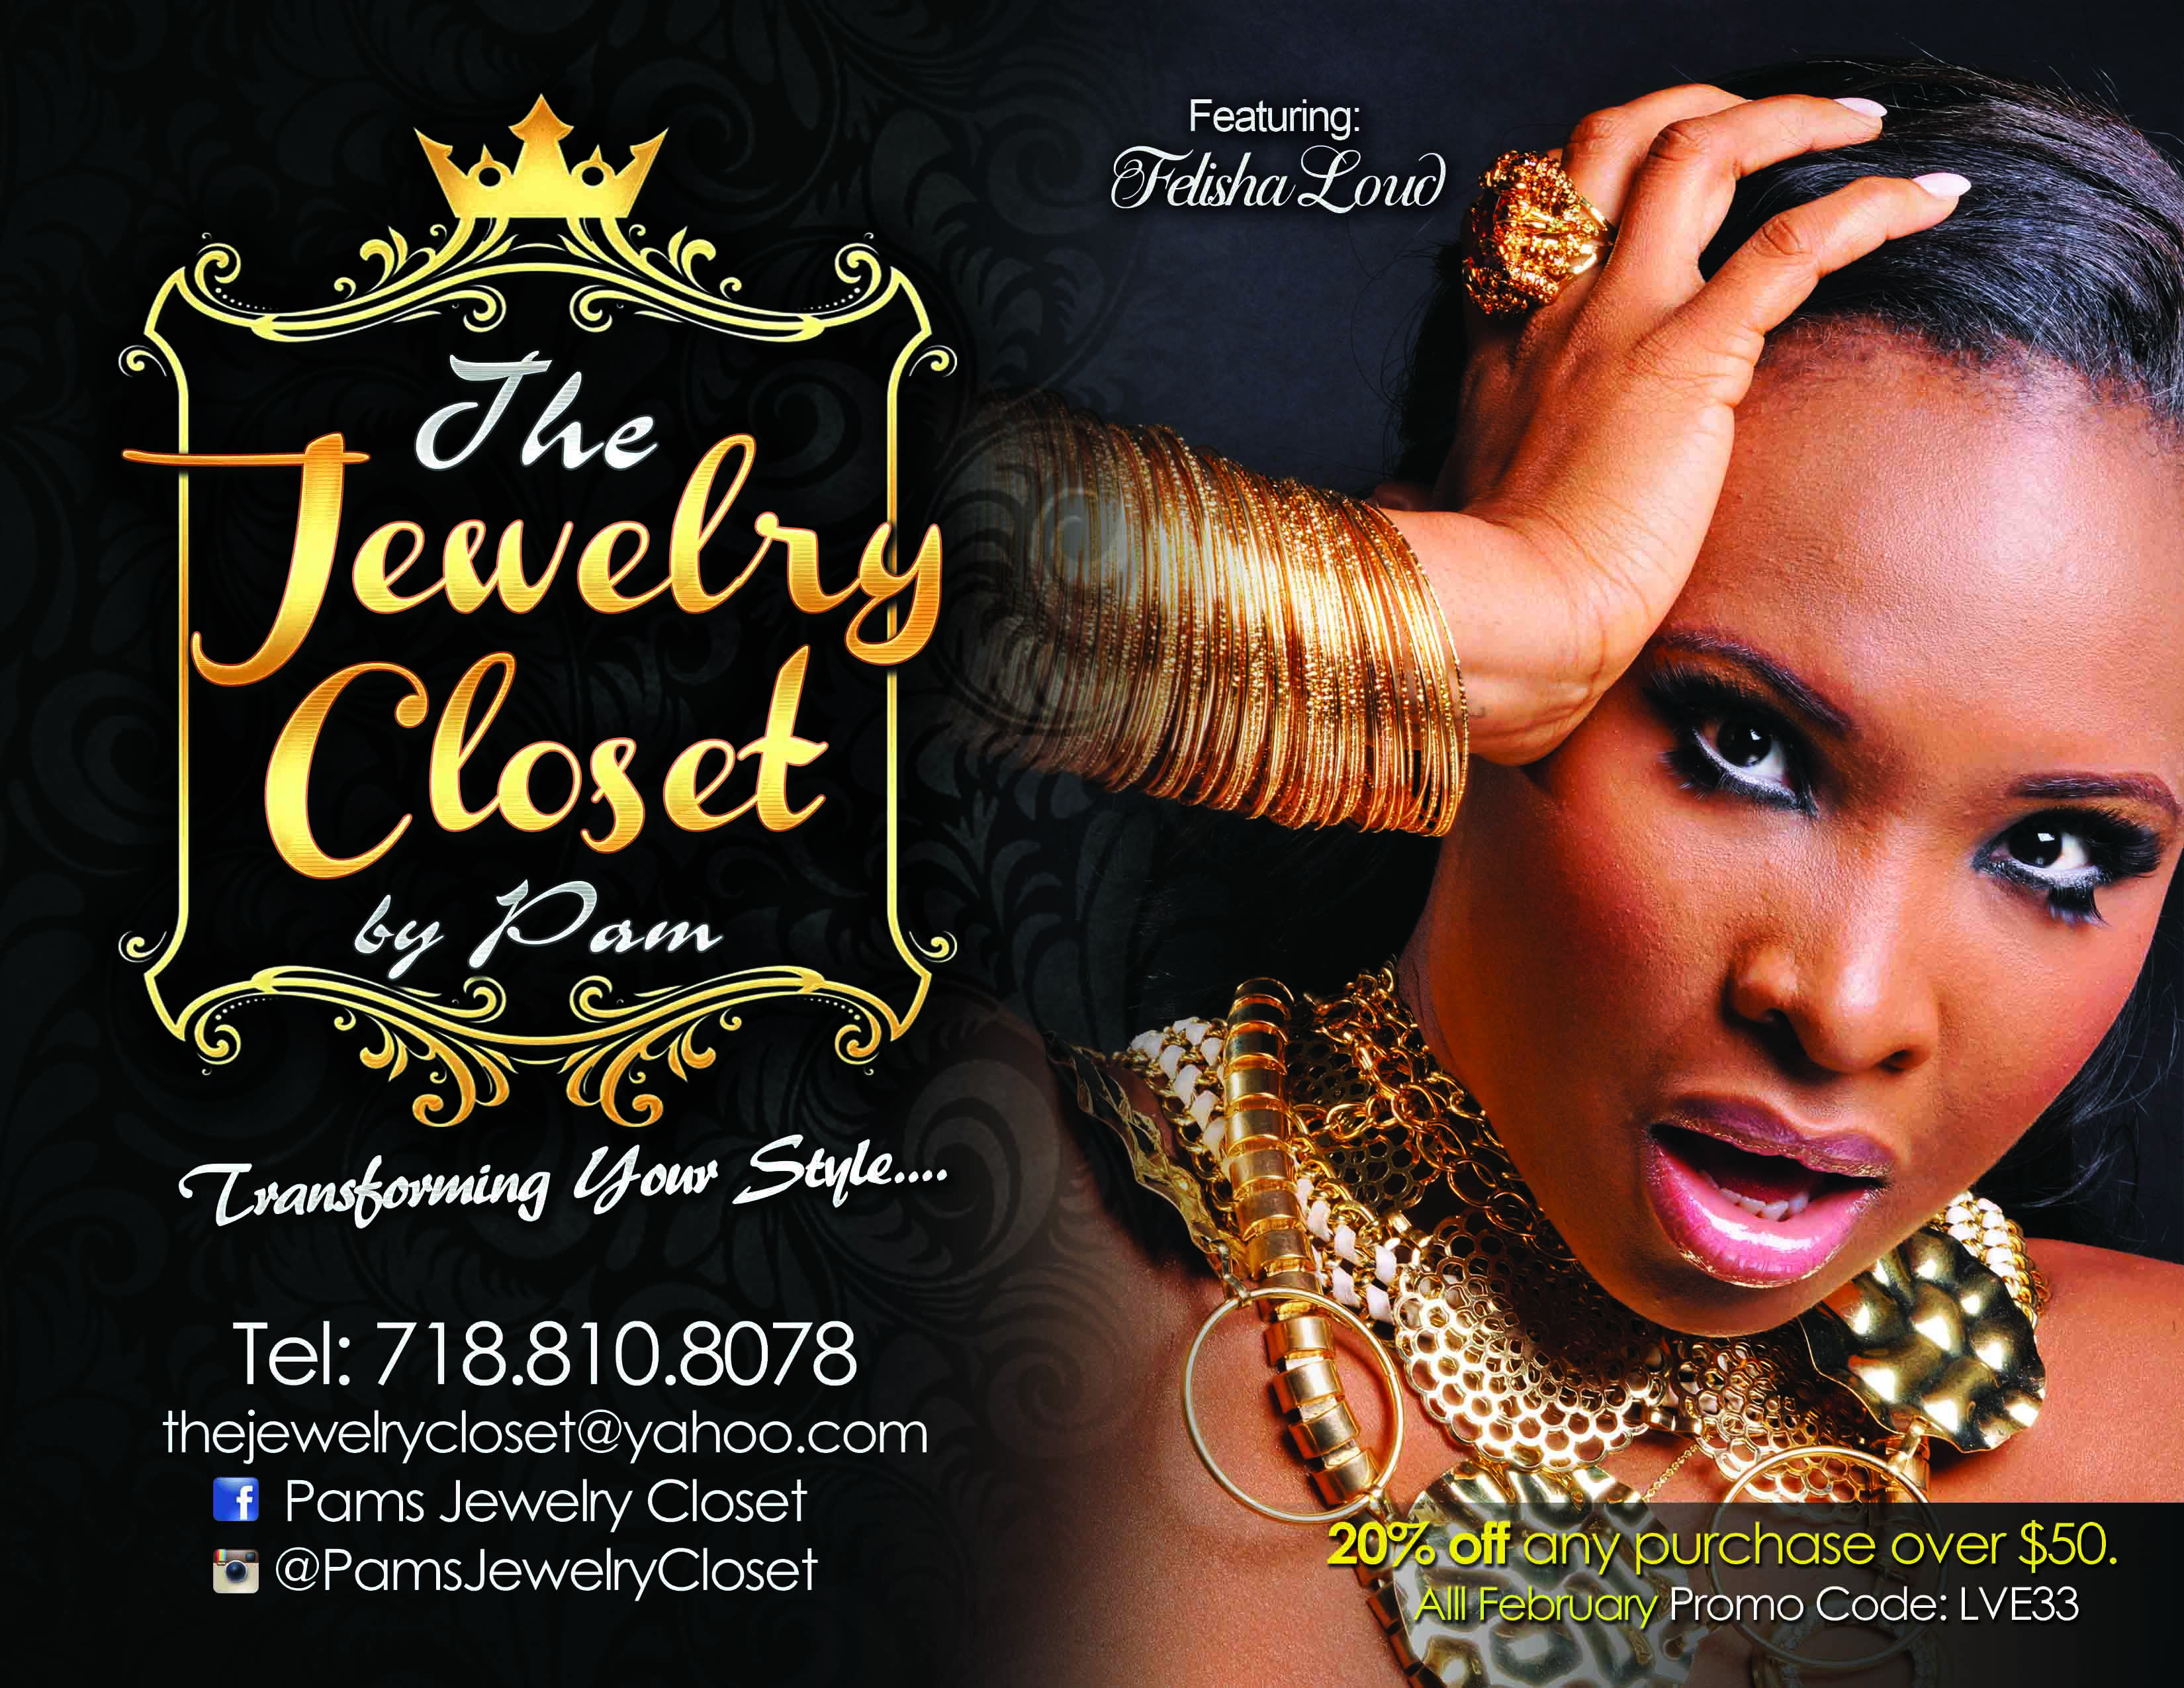 Felisha Lord Jewelry Closet web add.